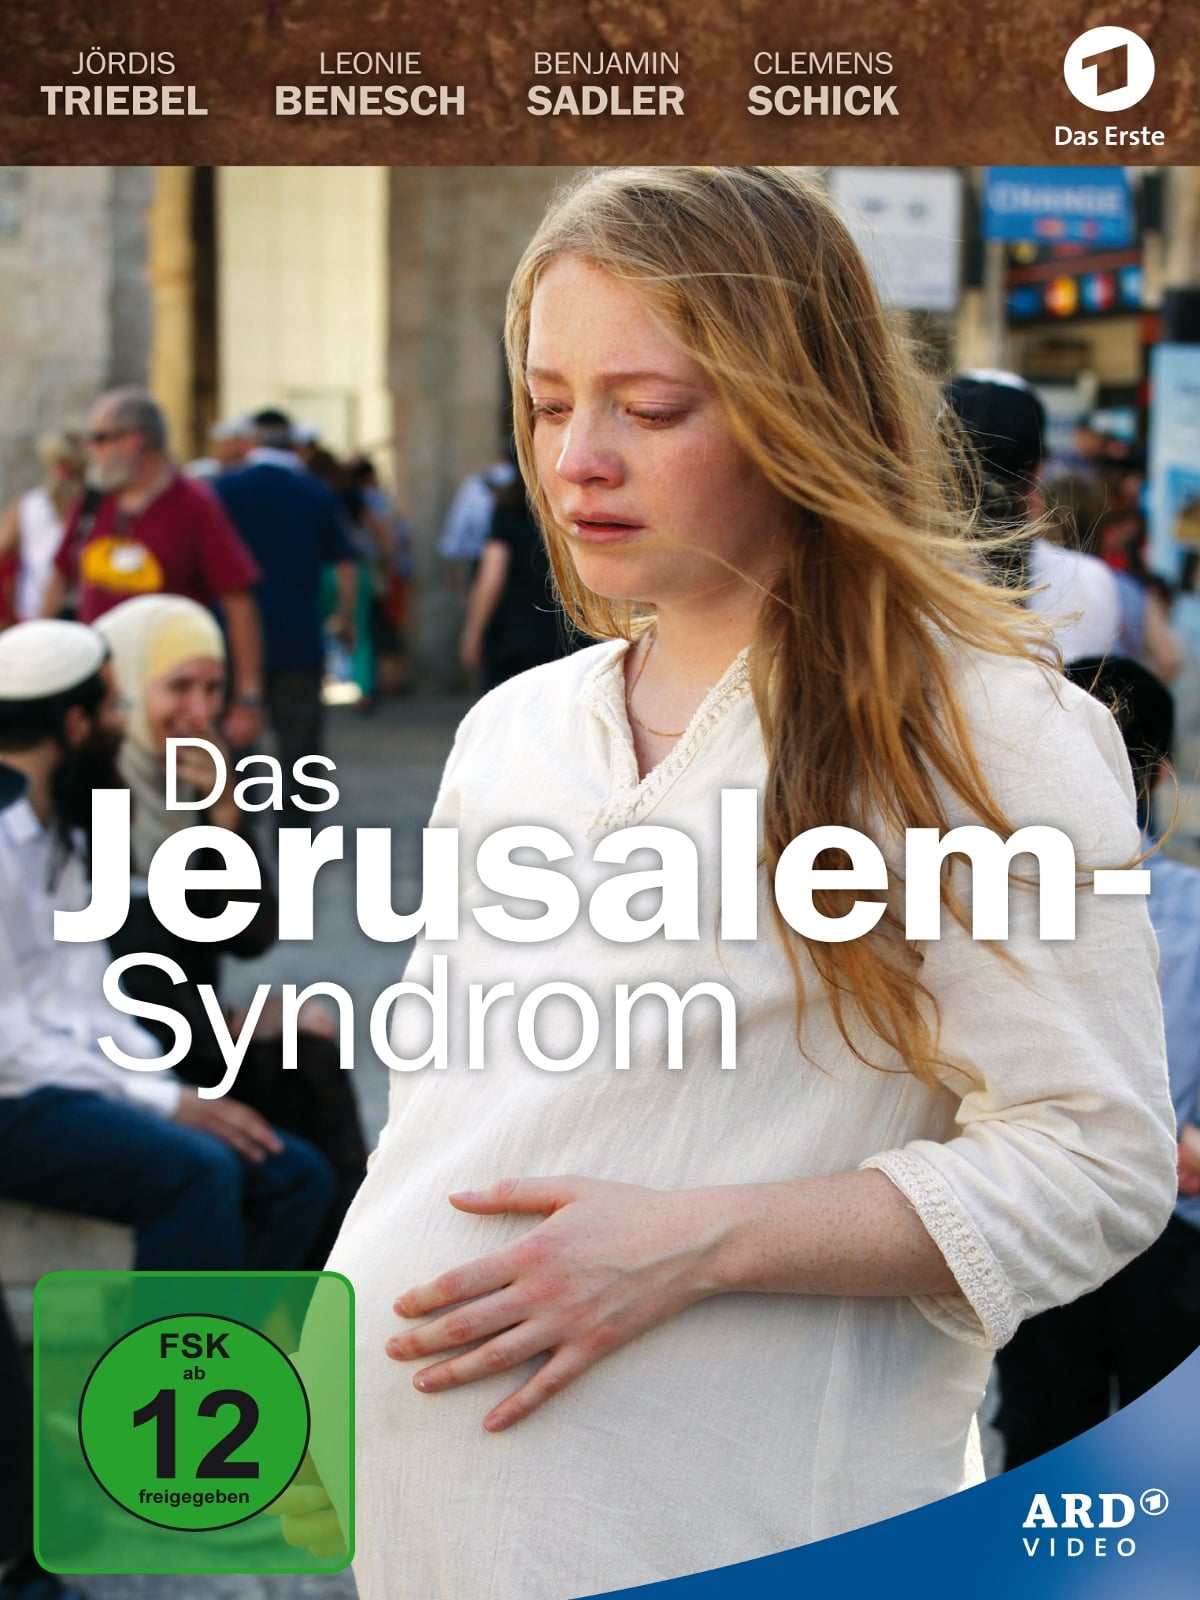 Das Jerusalem-Syndrom (2013)